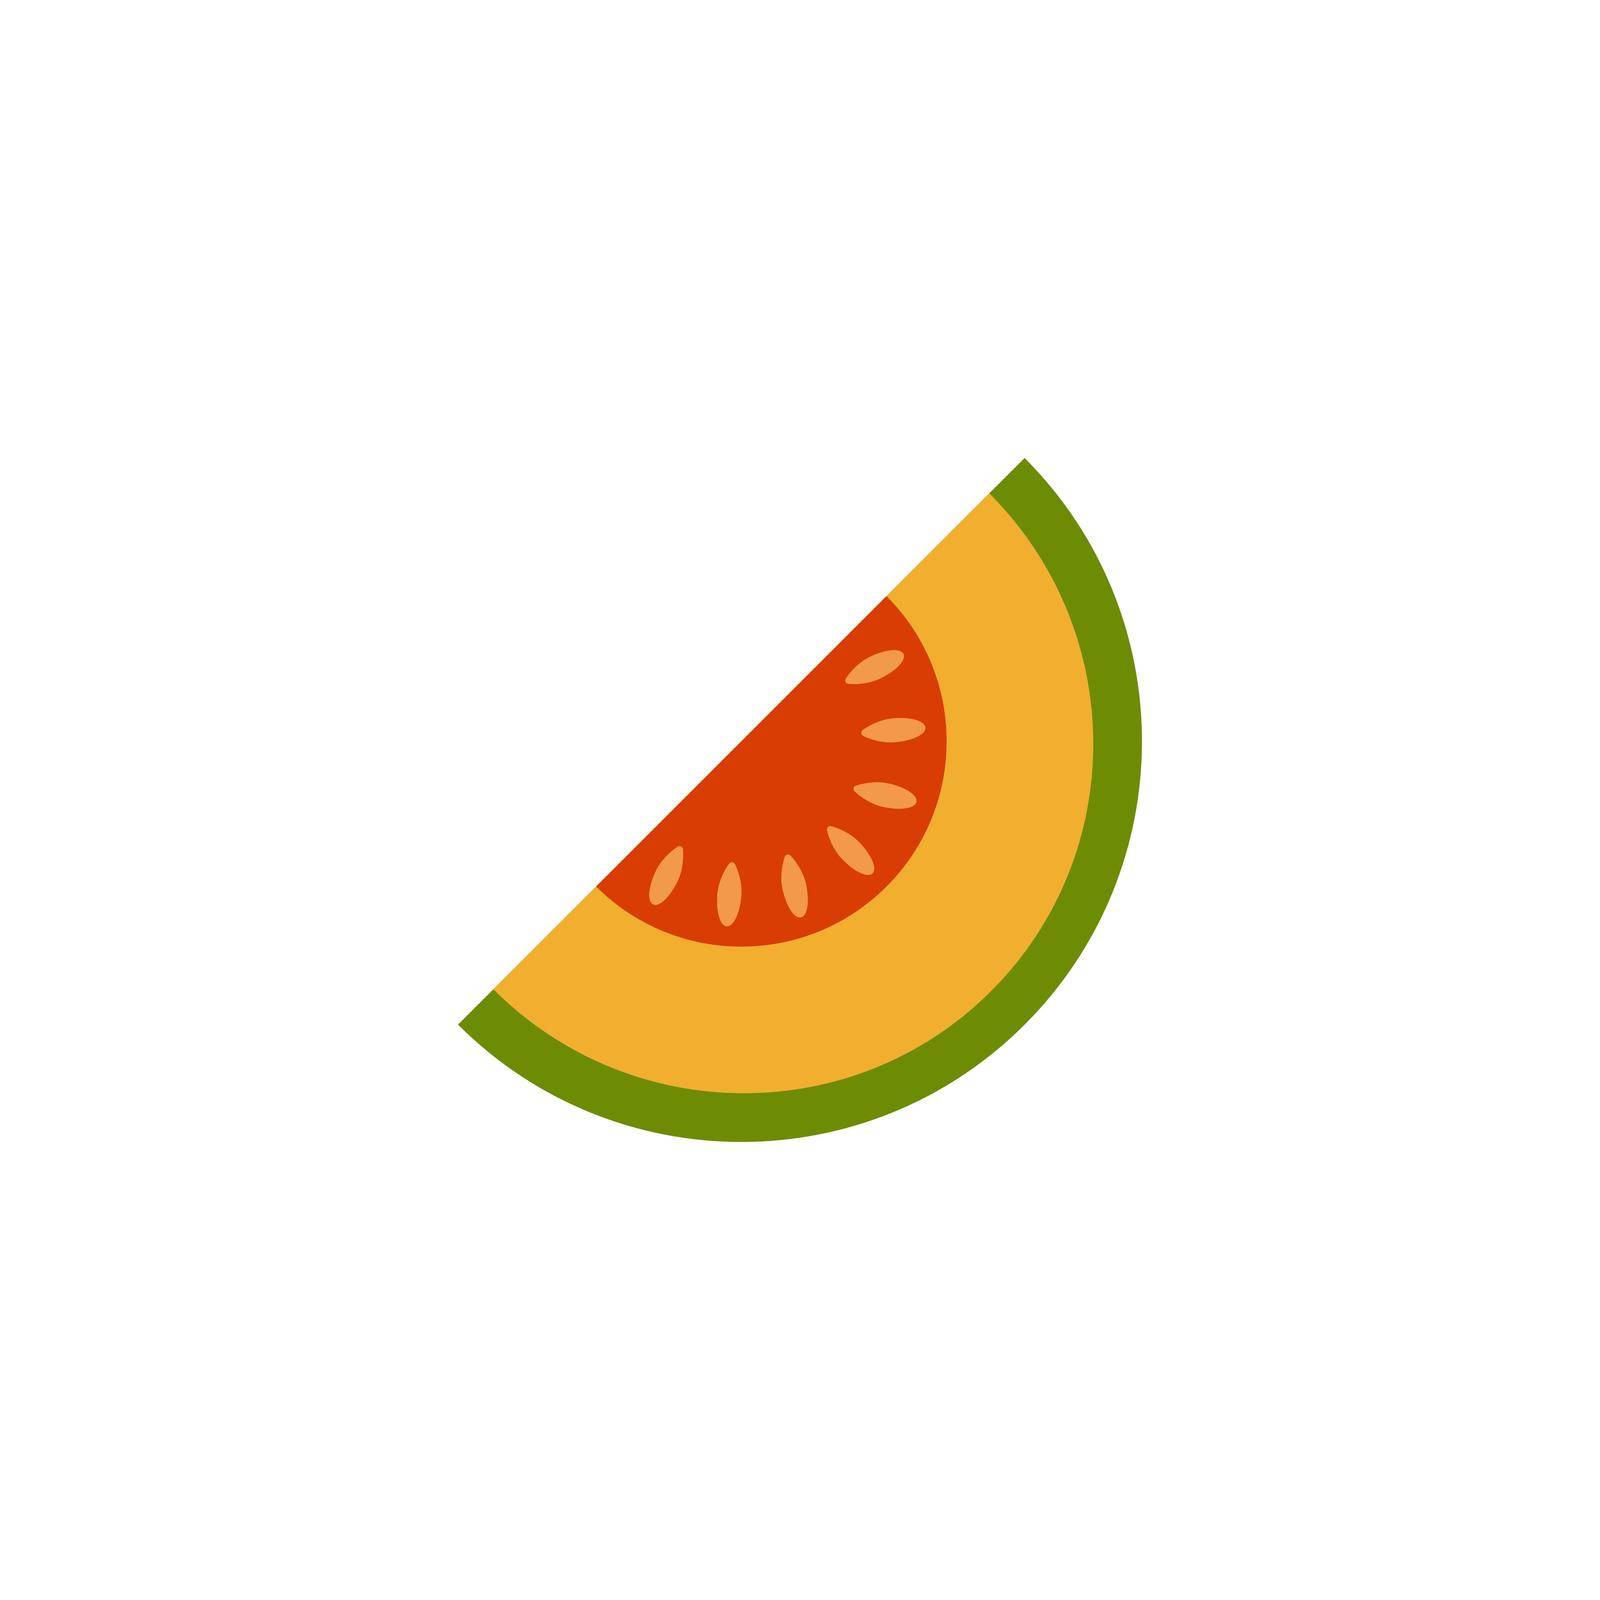 Melon logo vector. melon on white background. Half melon. isolated